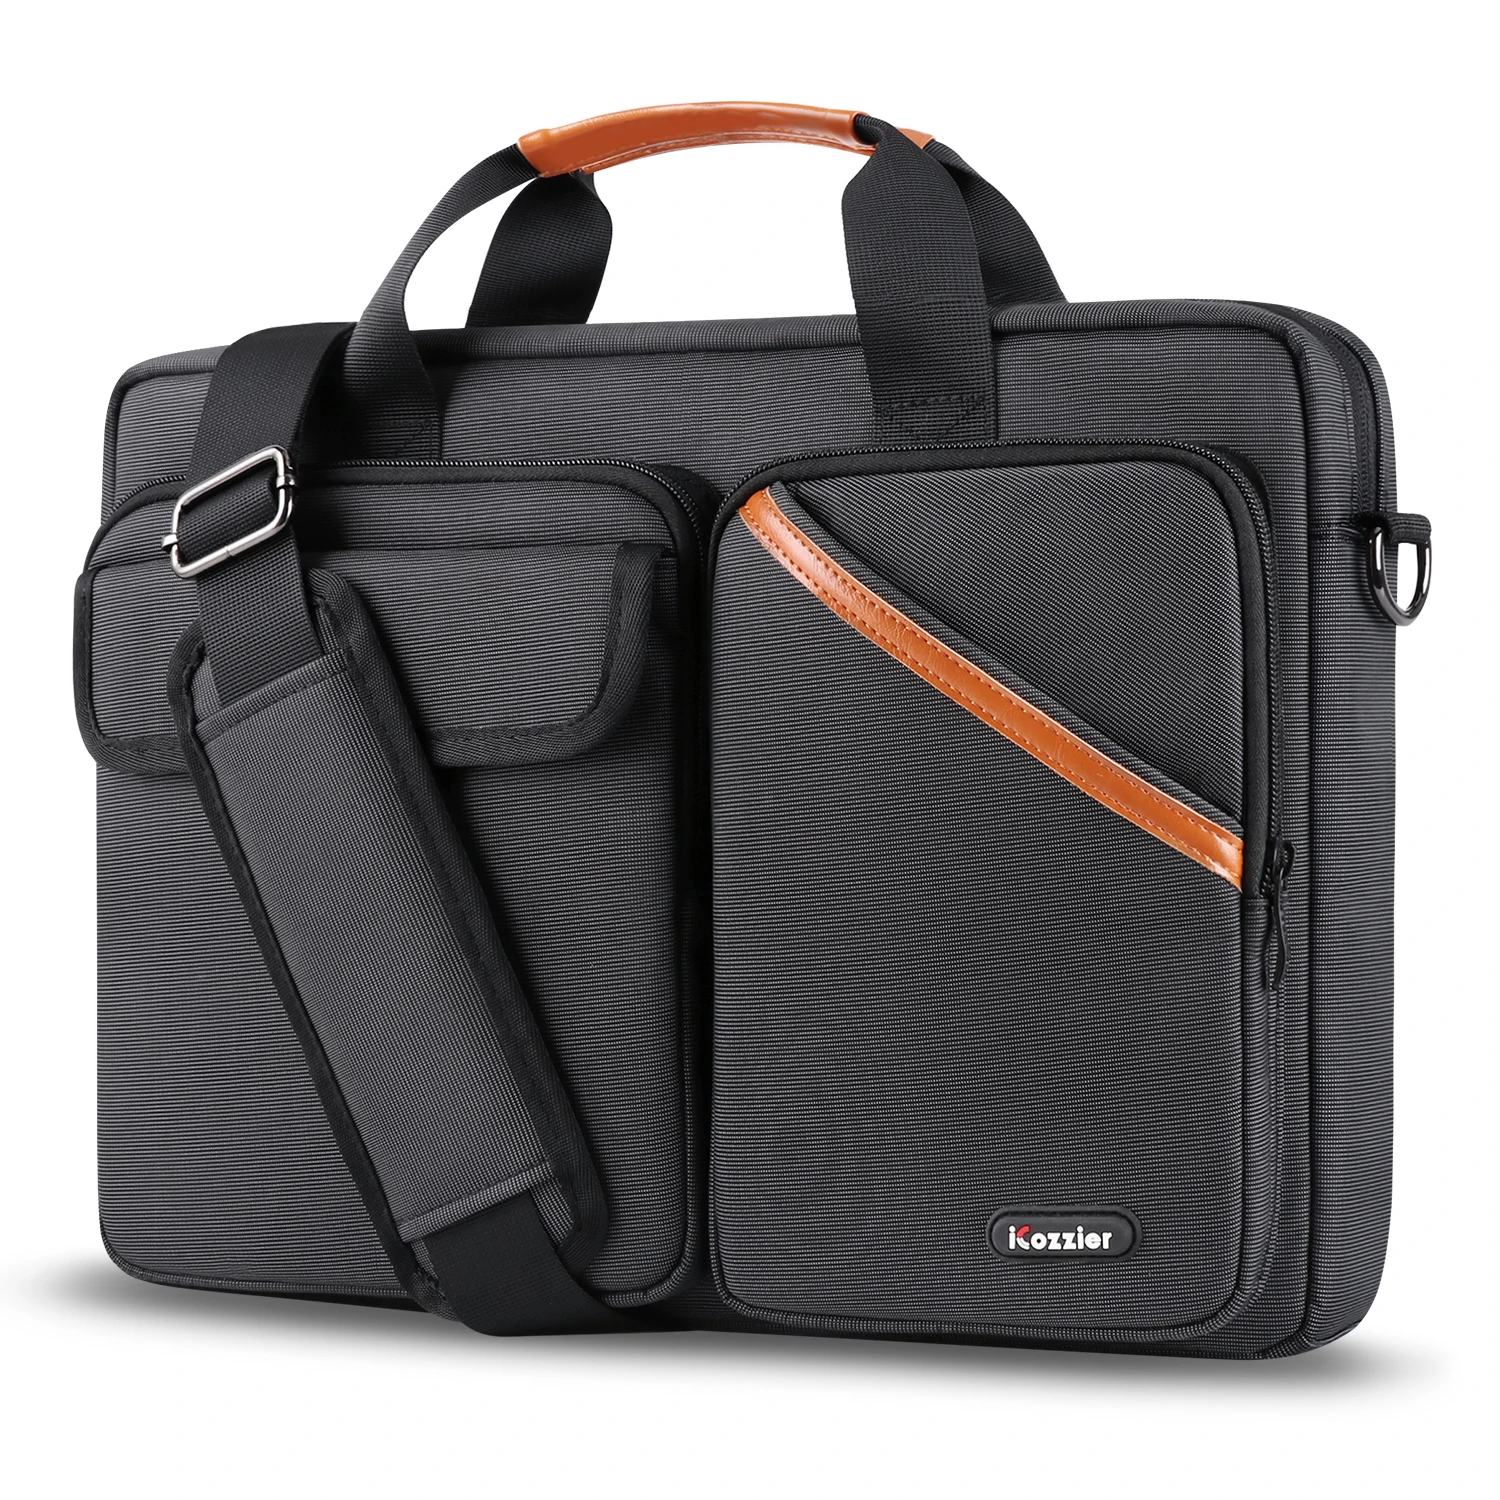 

iCozzier 13.3/15.6 Inch Multi-Pocket Laptop Sleeve Large Capacity Shoulder Bag Electronic Organizer Waterproof Carrying Case